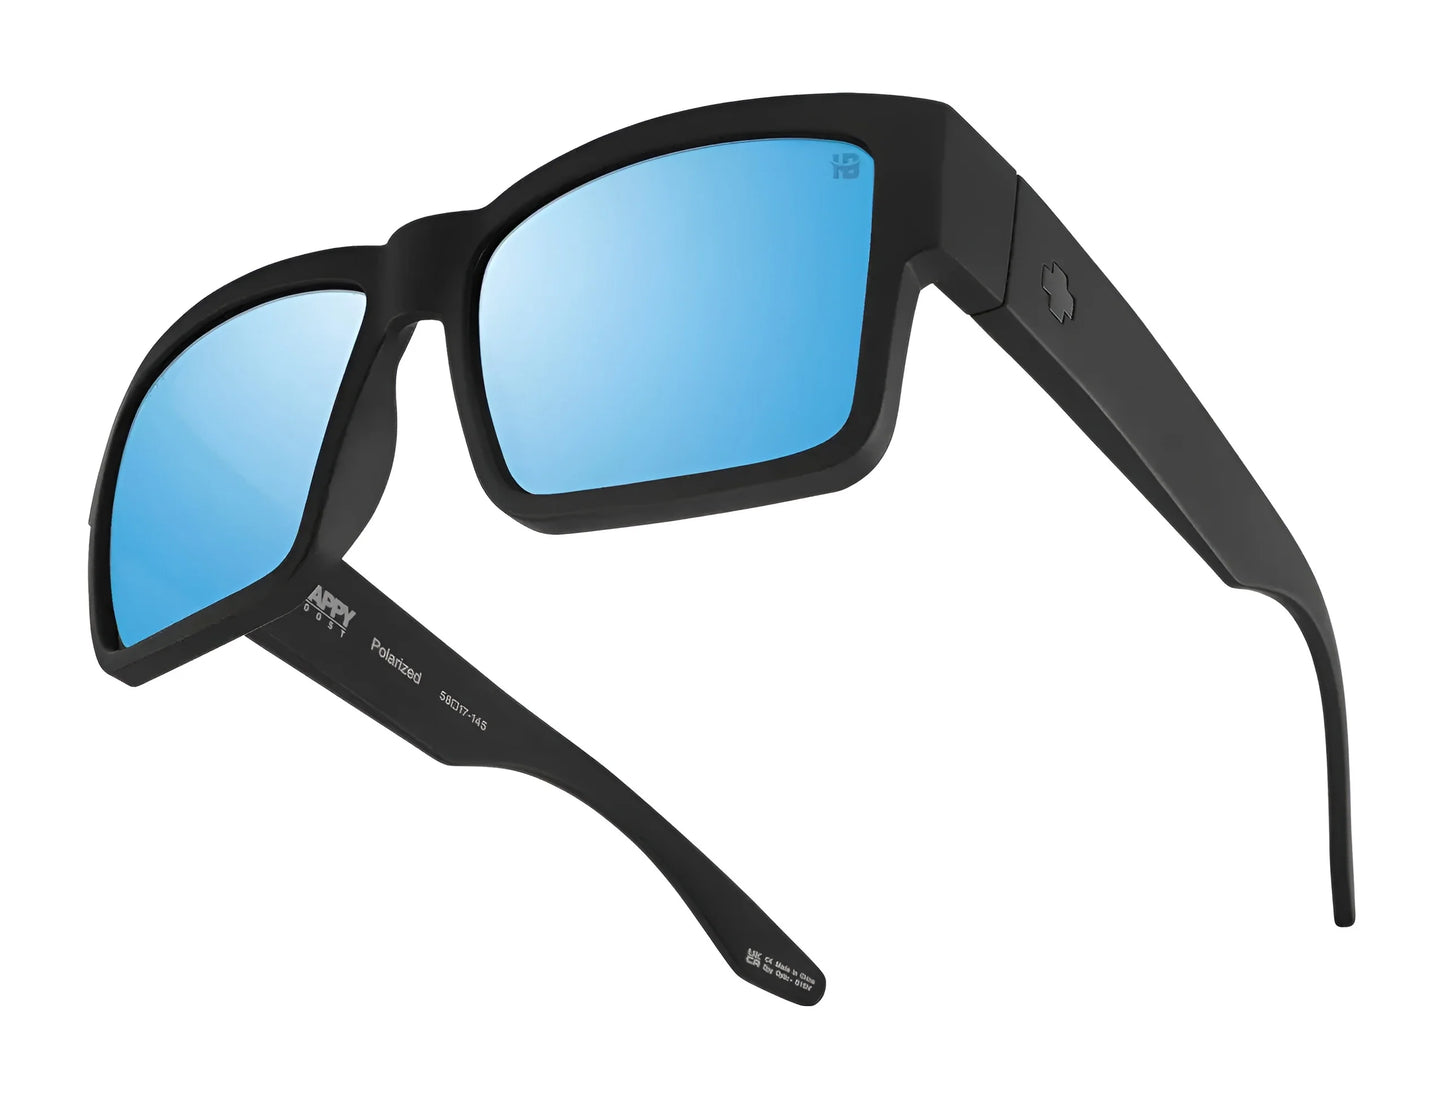 SPY CYRUS Sunglasses | Size 58